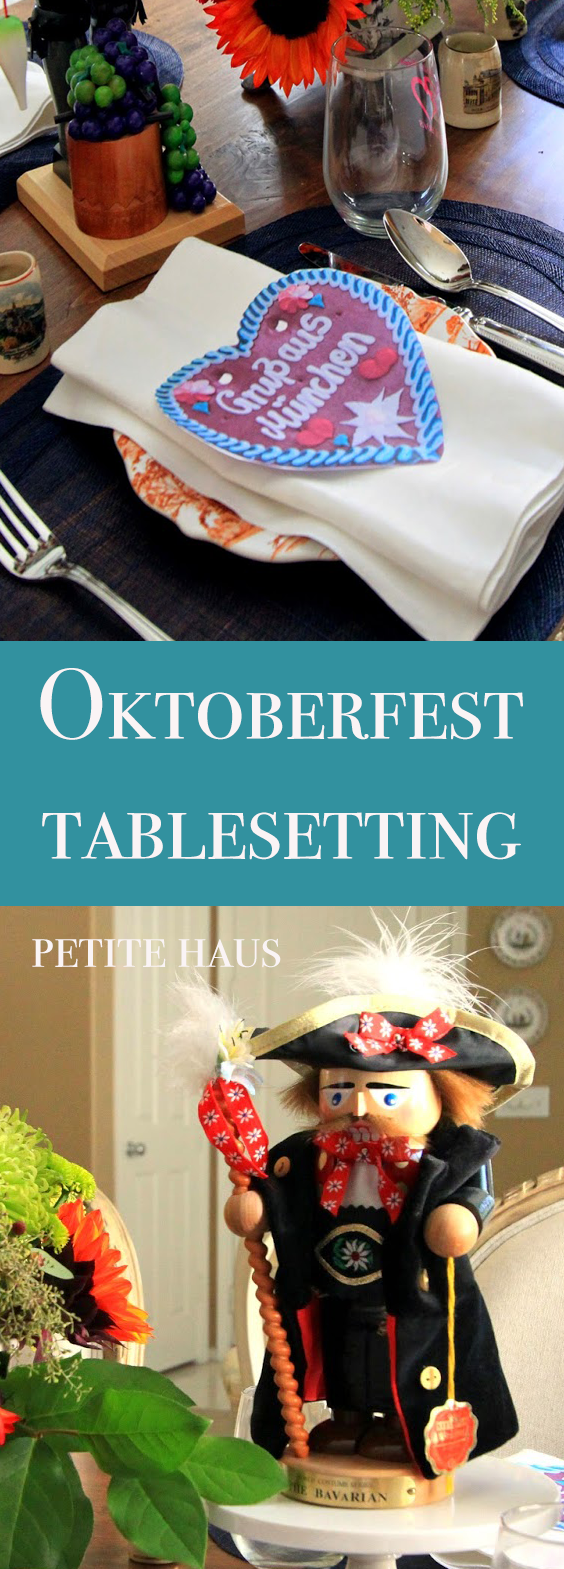 oktoberfest tablesetting